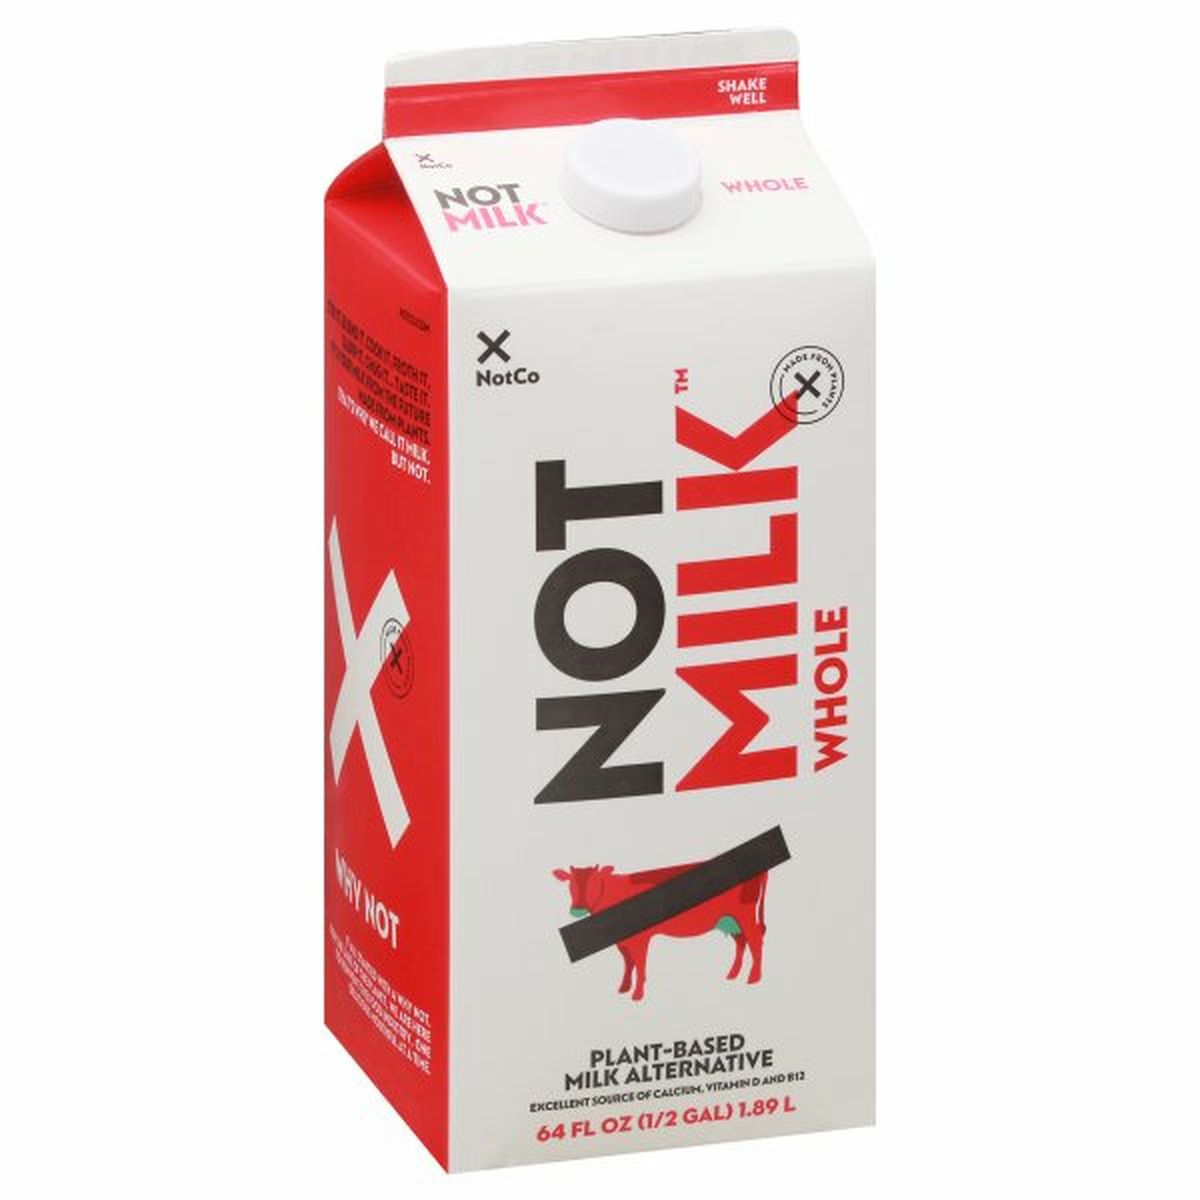 Calories in Not Milk Milk Alternative, Whole, Plant-Based